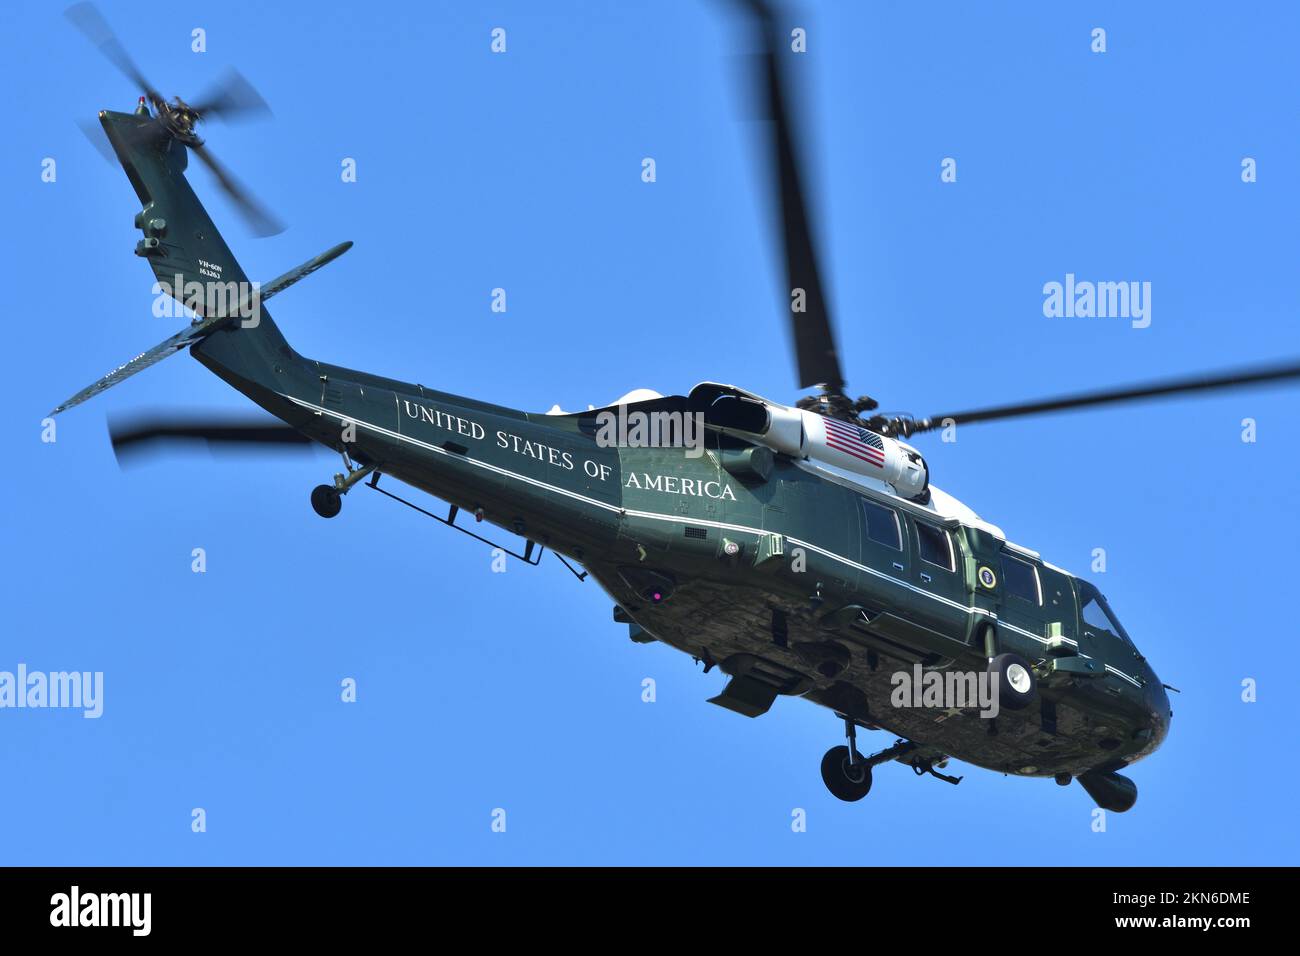 Tokyo, Giappone - 26 maggio 2019: United States Marines Sikorsky VH-60N White Hawk VIP Transport Helicopter. Il presidente Donald Trump a bordo di Marine One. Foto Stock